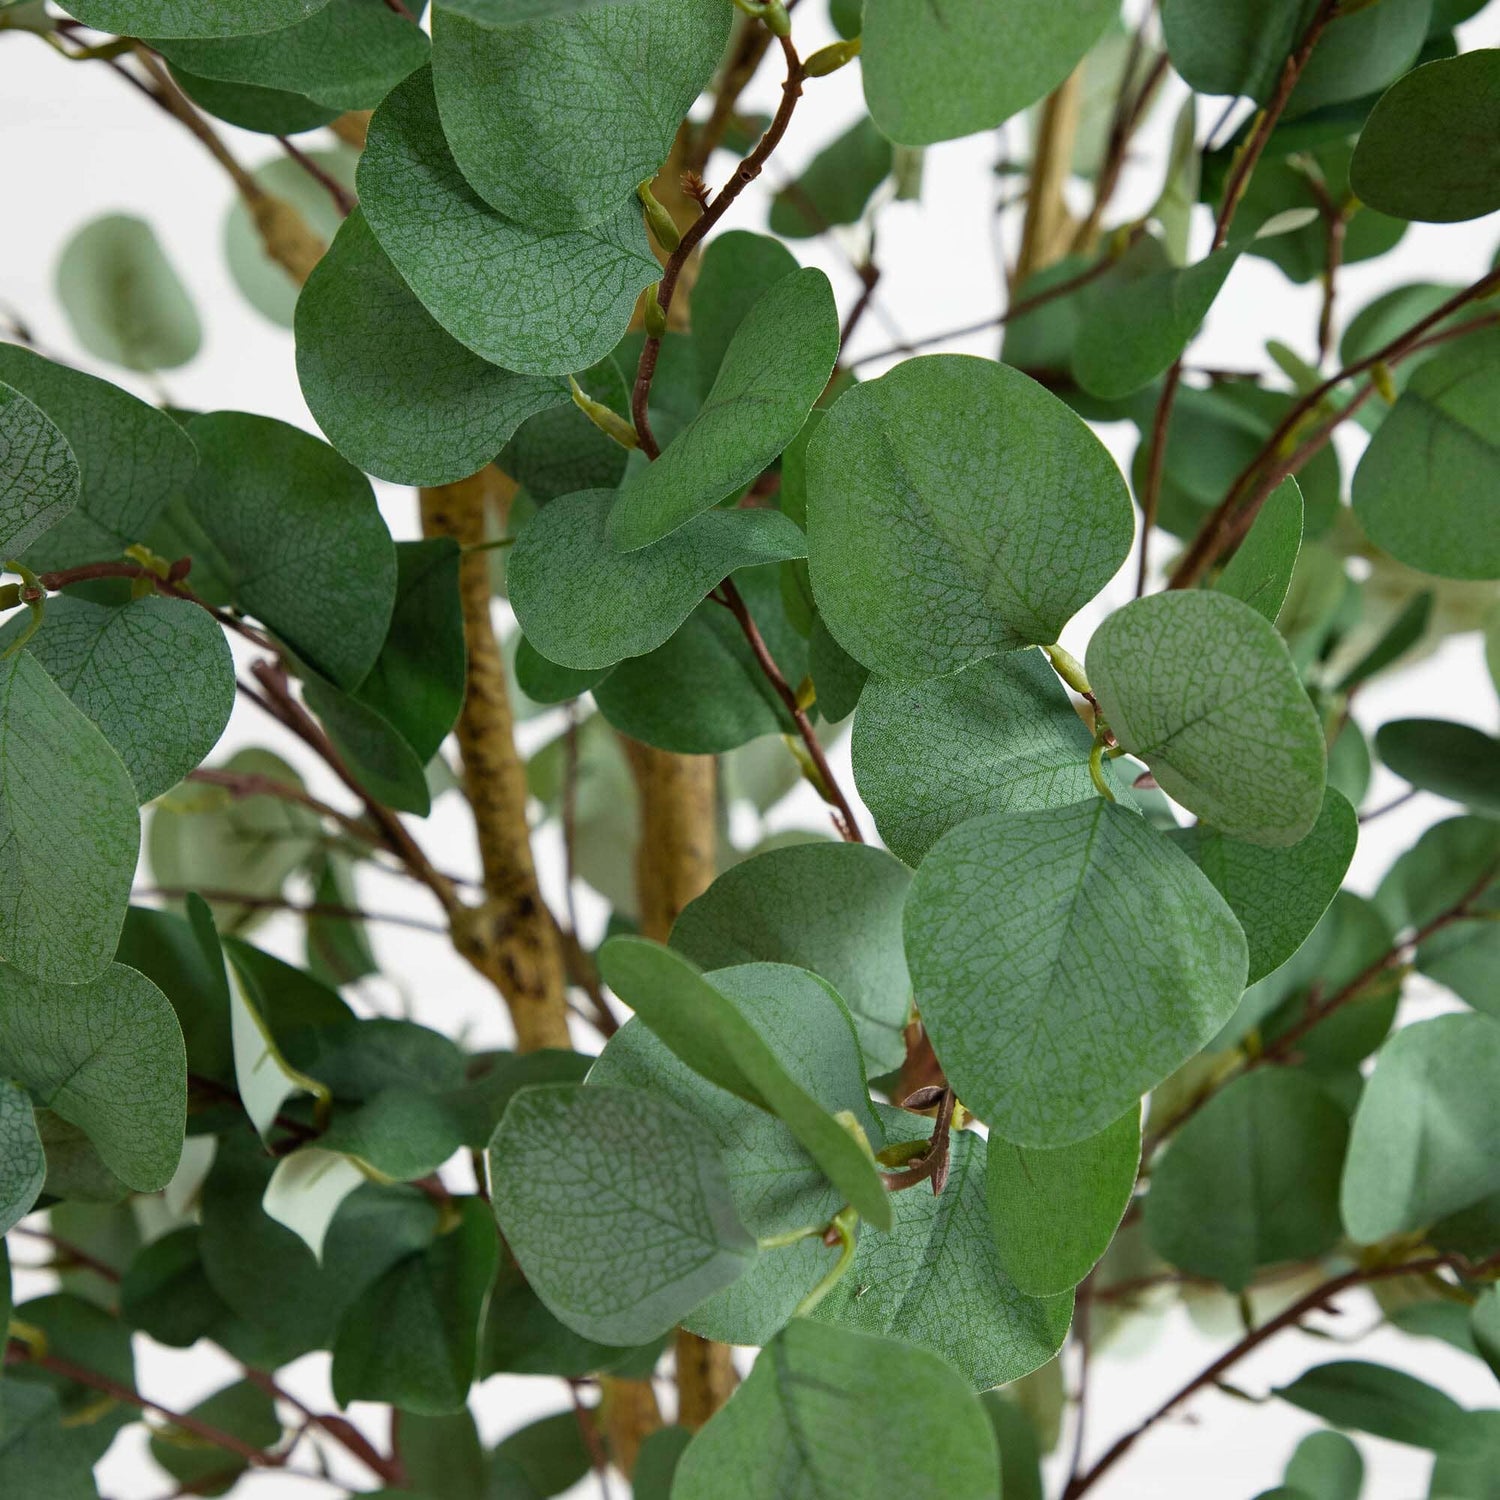 8’ Artificial Eucalyptus Tree